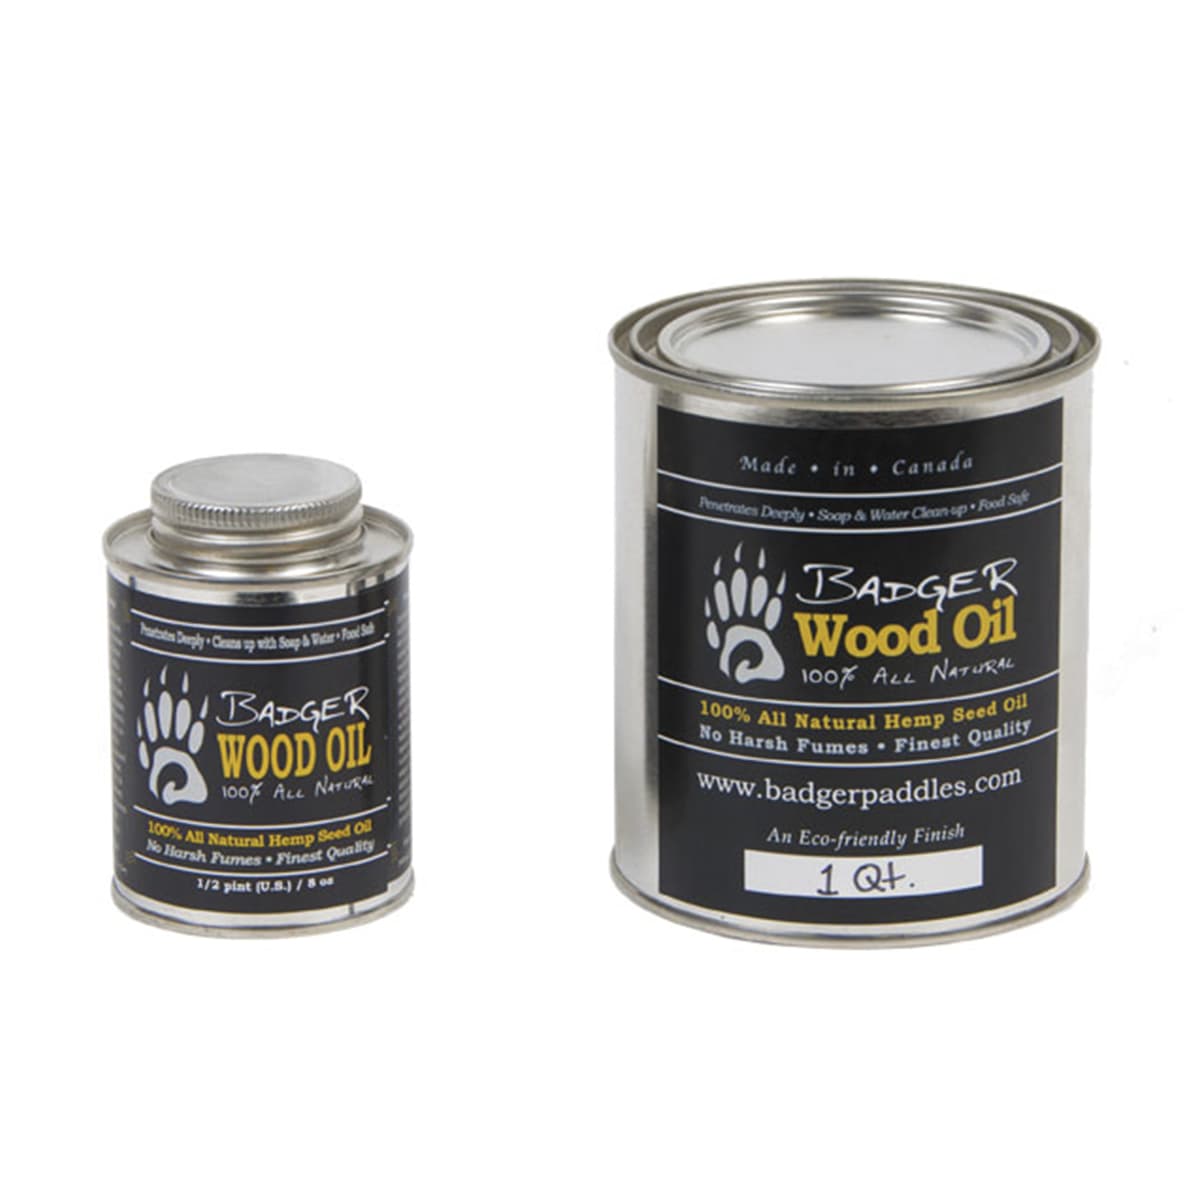 Badger Wood Oil